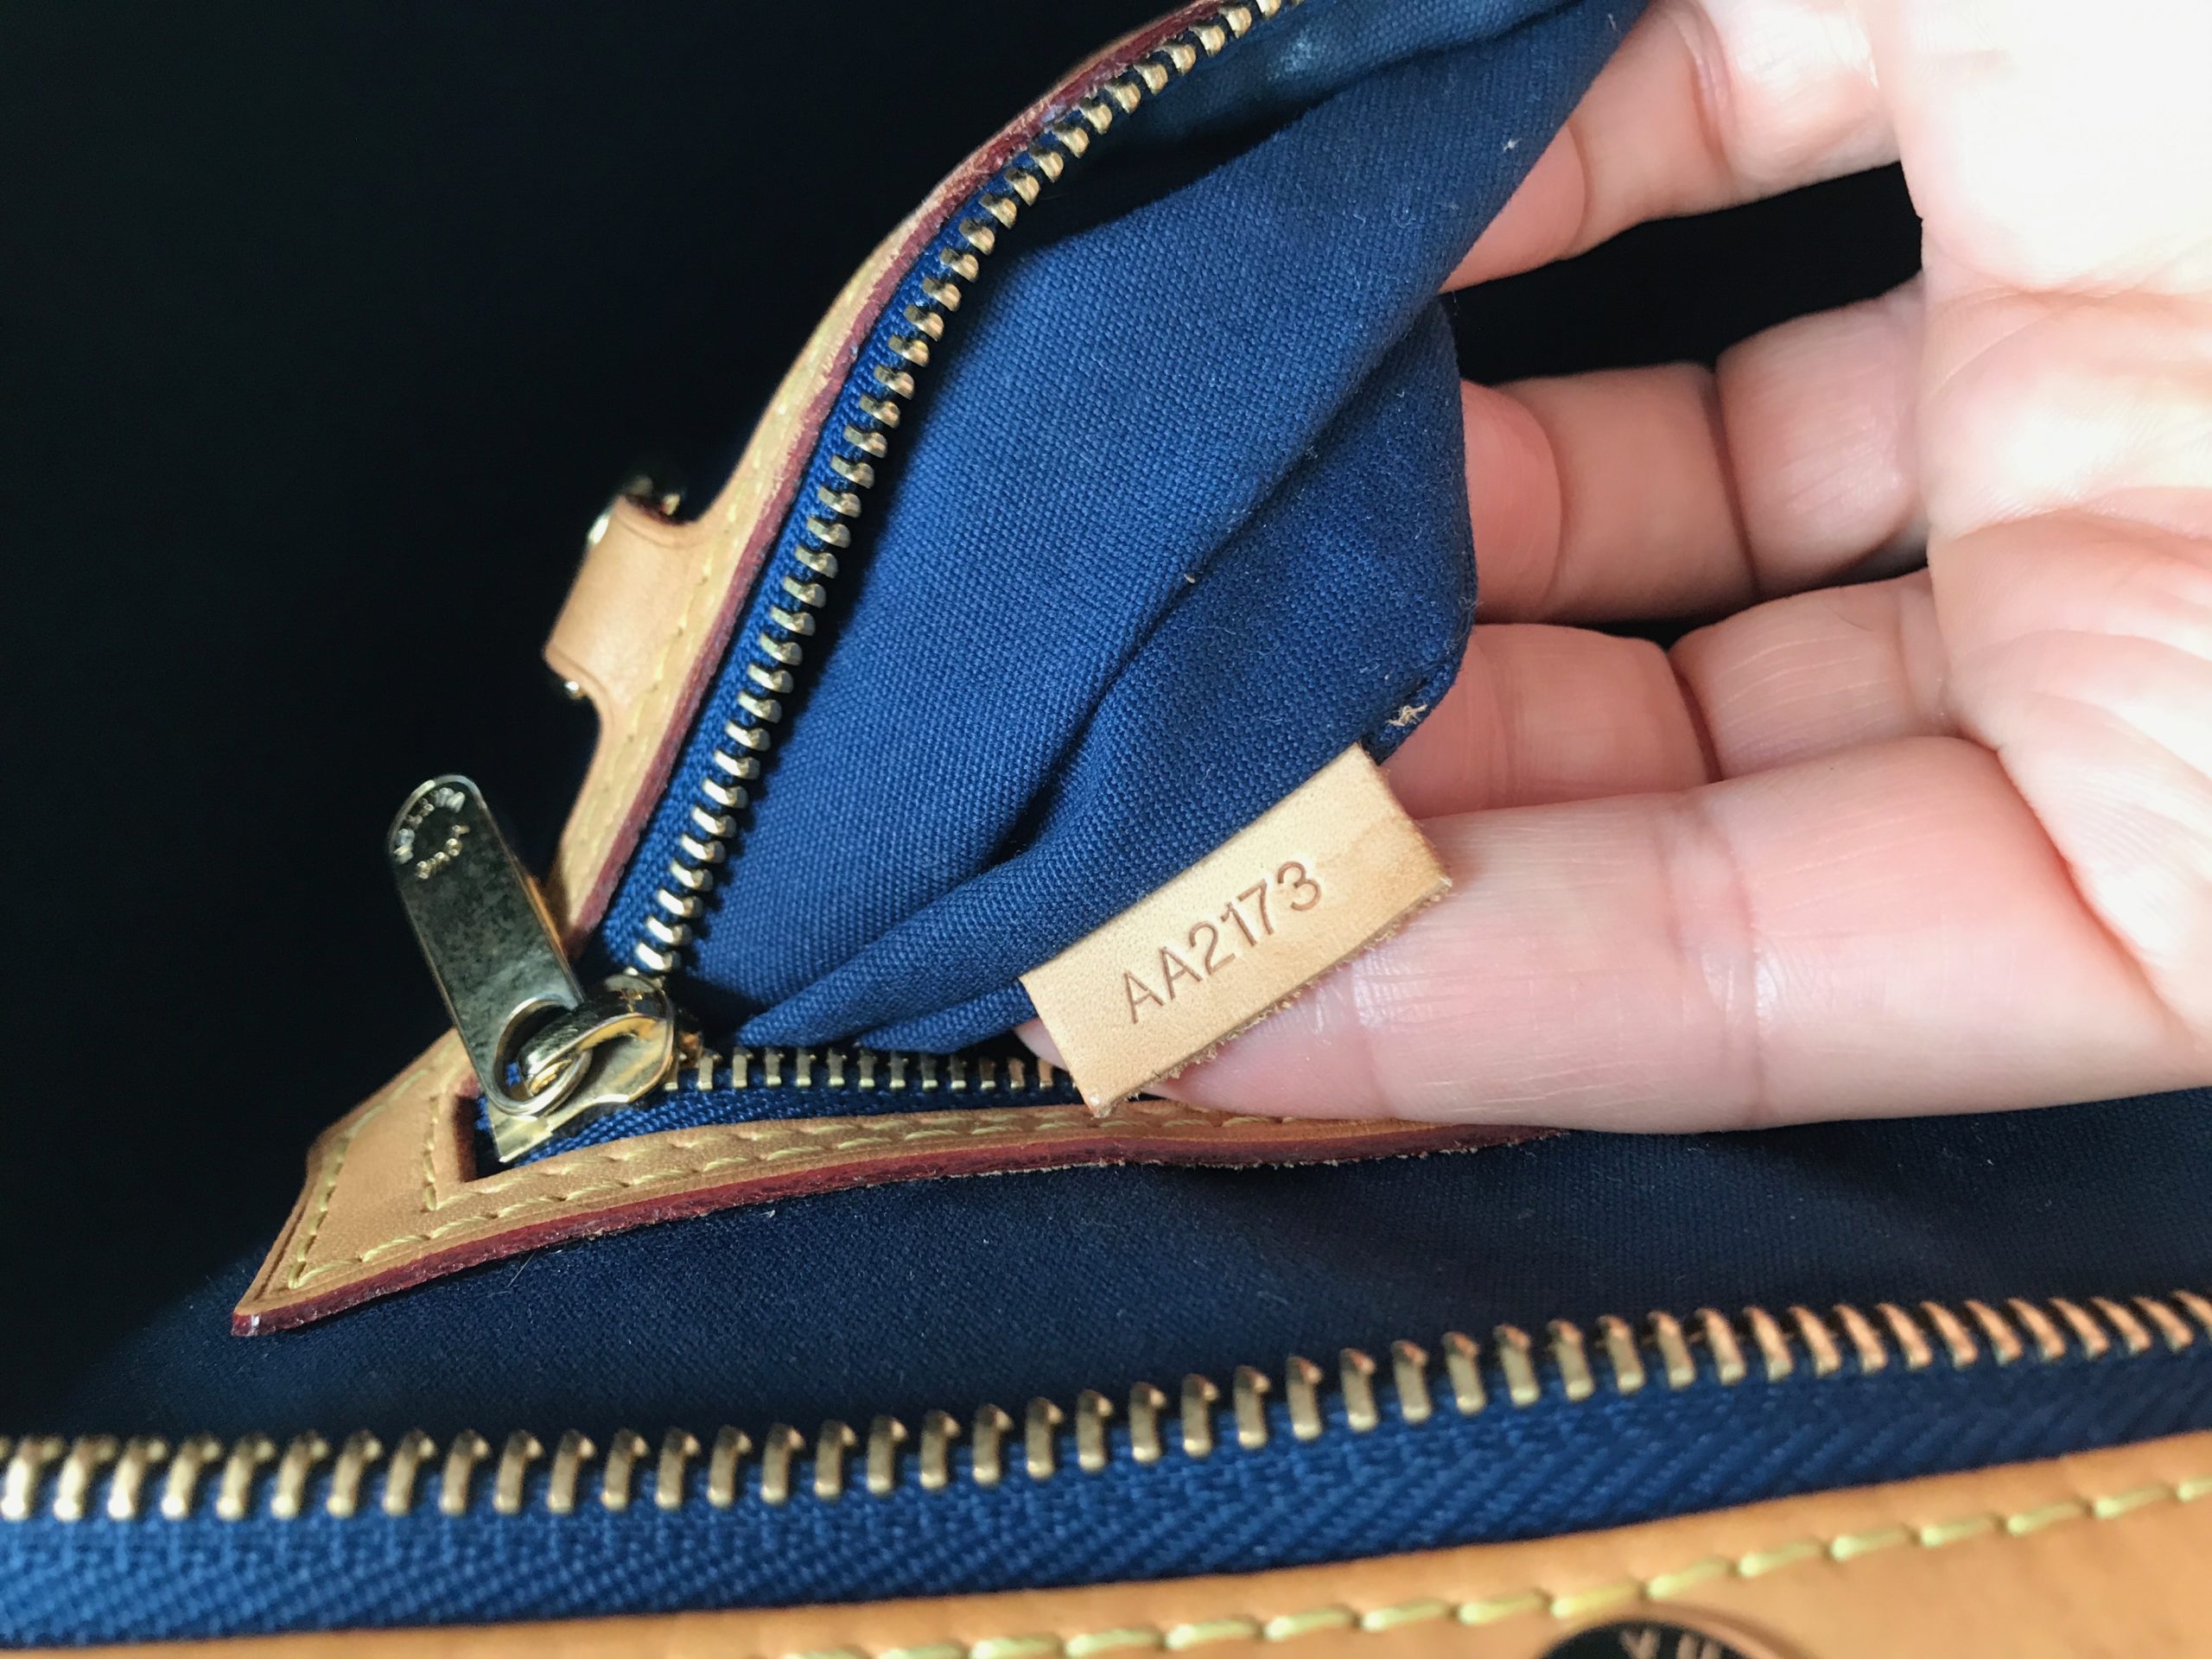 Louis Vuitton Grand Bleu Monogram Vernis Brea MM - Preloved LV Bags